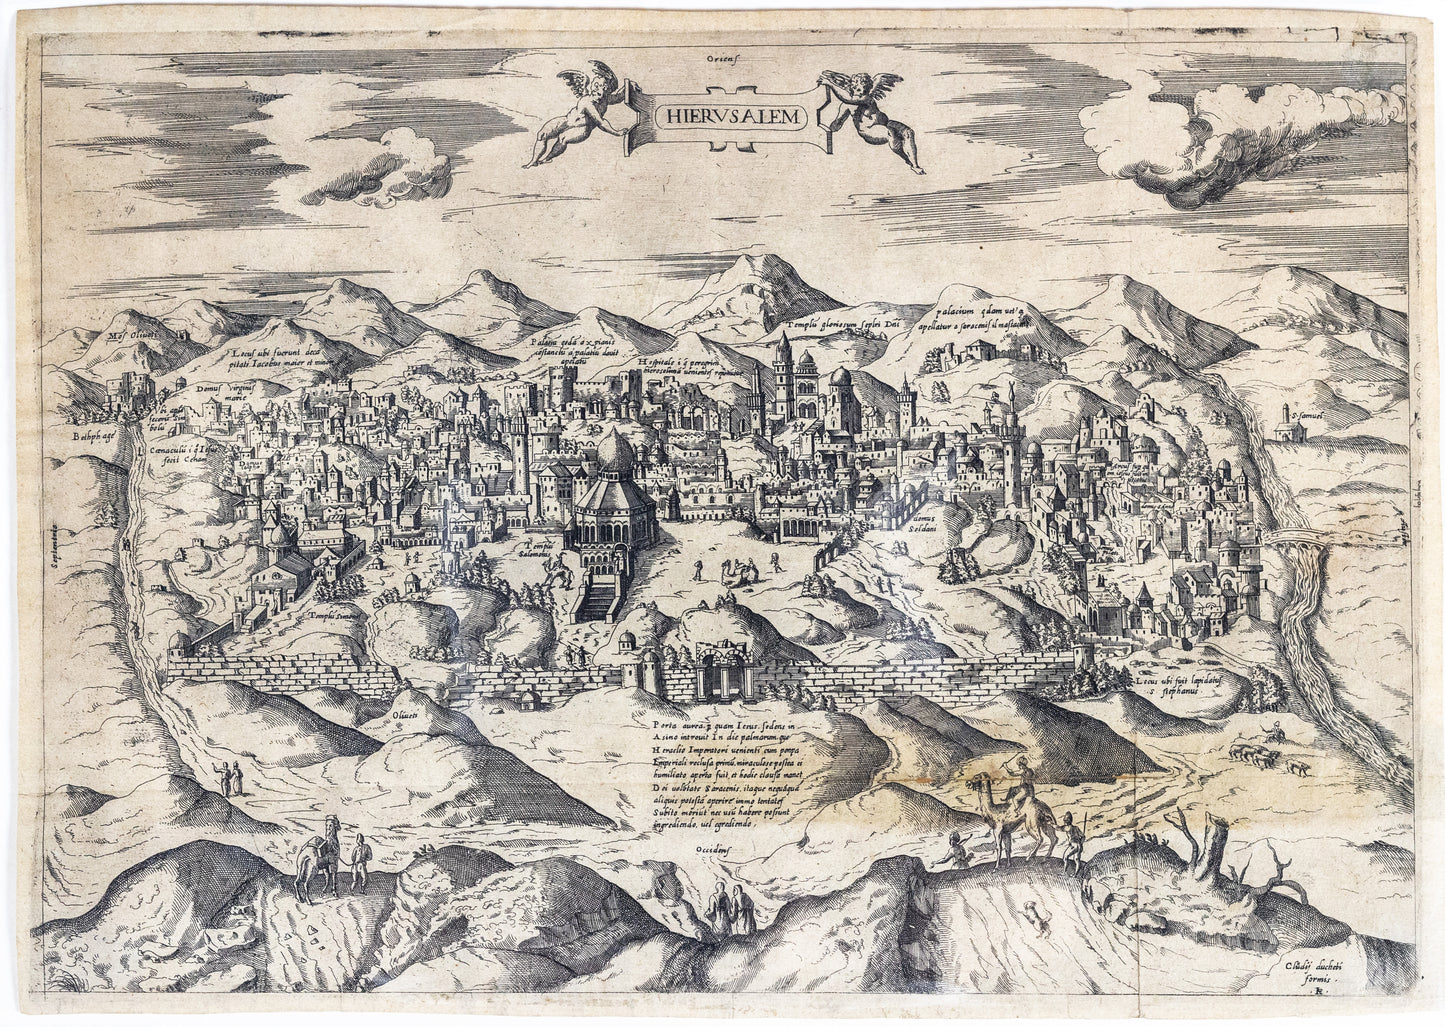 Duchetti, Claudio. Hierusalem. Venice: ca. 1570